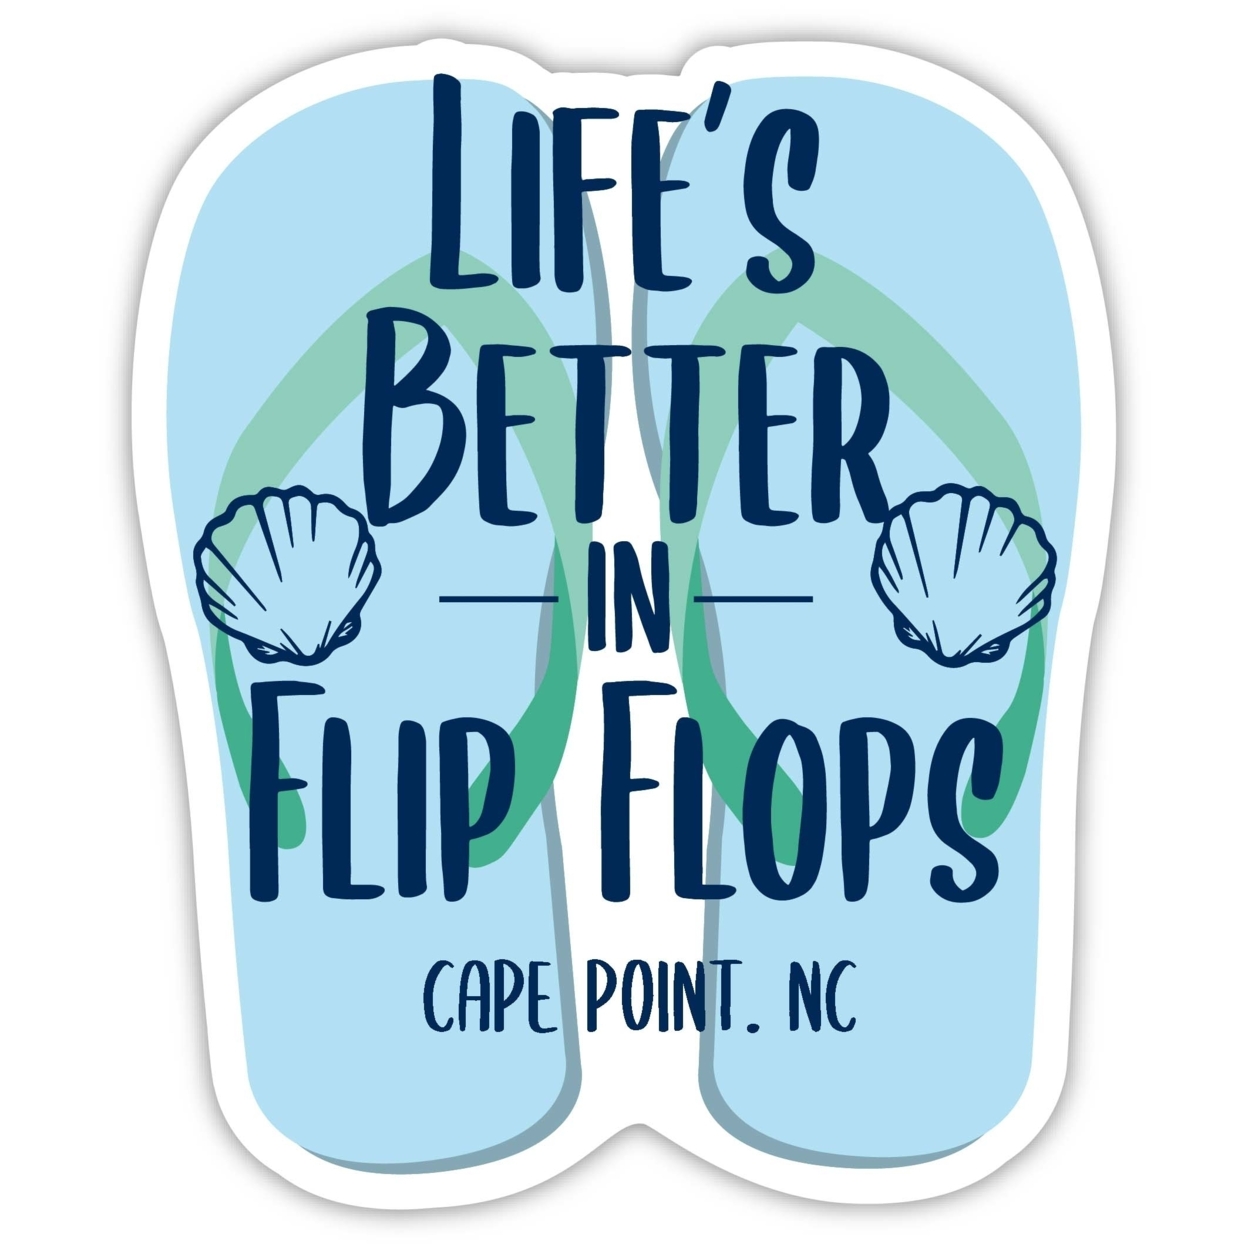 Cape Point North Carolina Souvenir 4 Inch Vinyl Decal Sticker Flip Flop Design